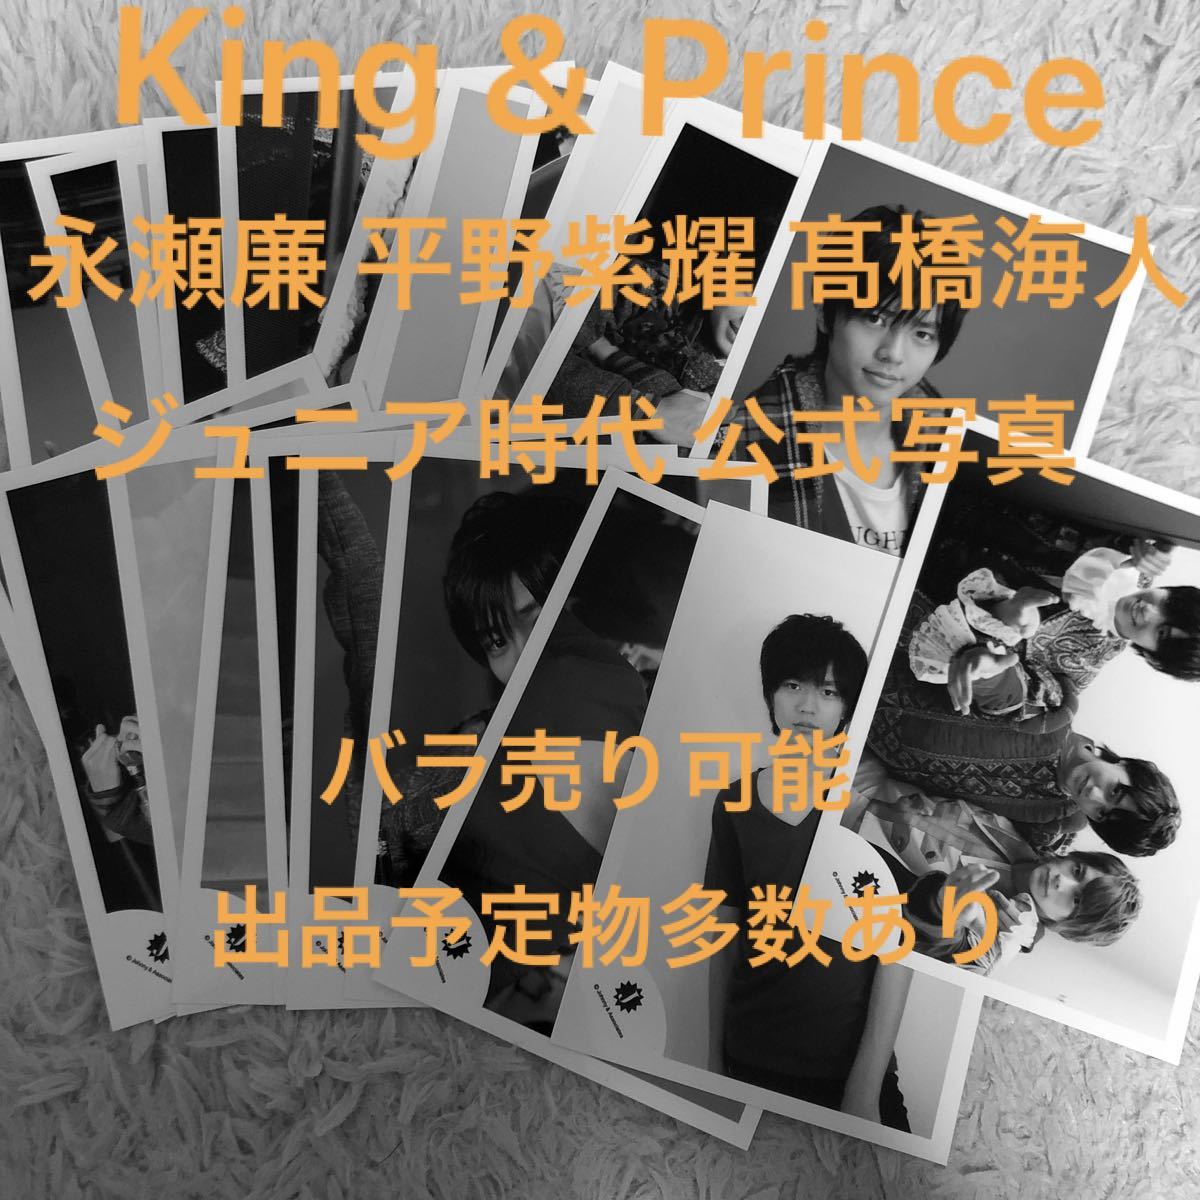 King&Prince 永瀬廉 Jr時代 公式写真① www.esnmurcia.org